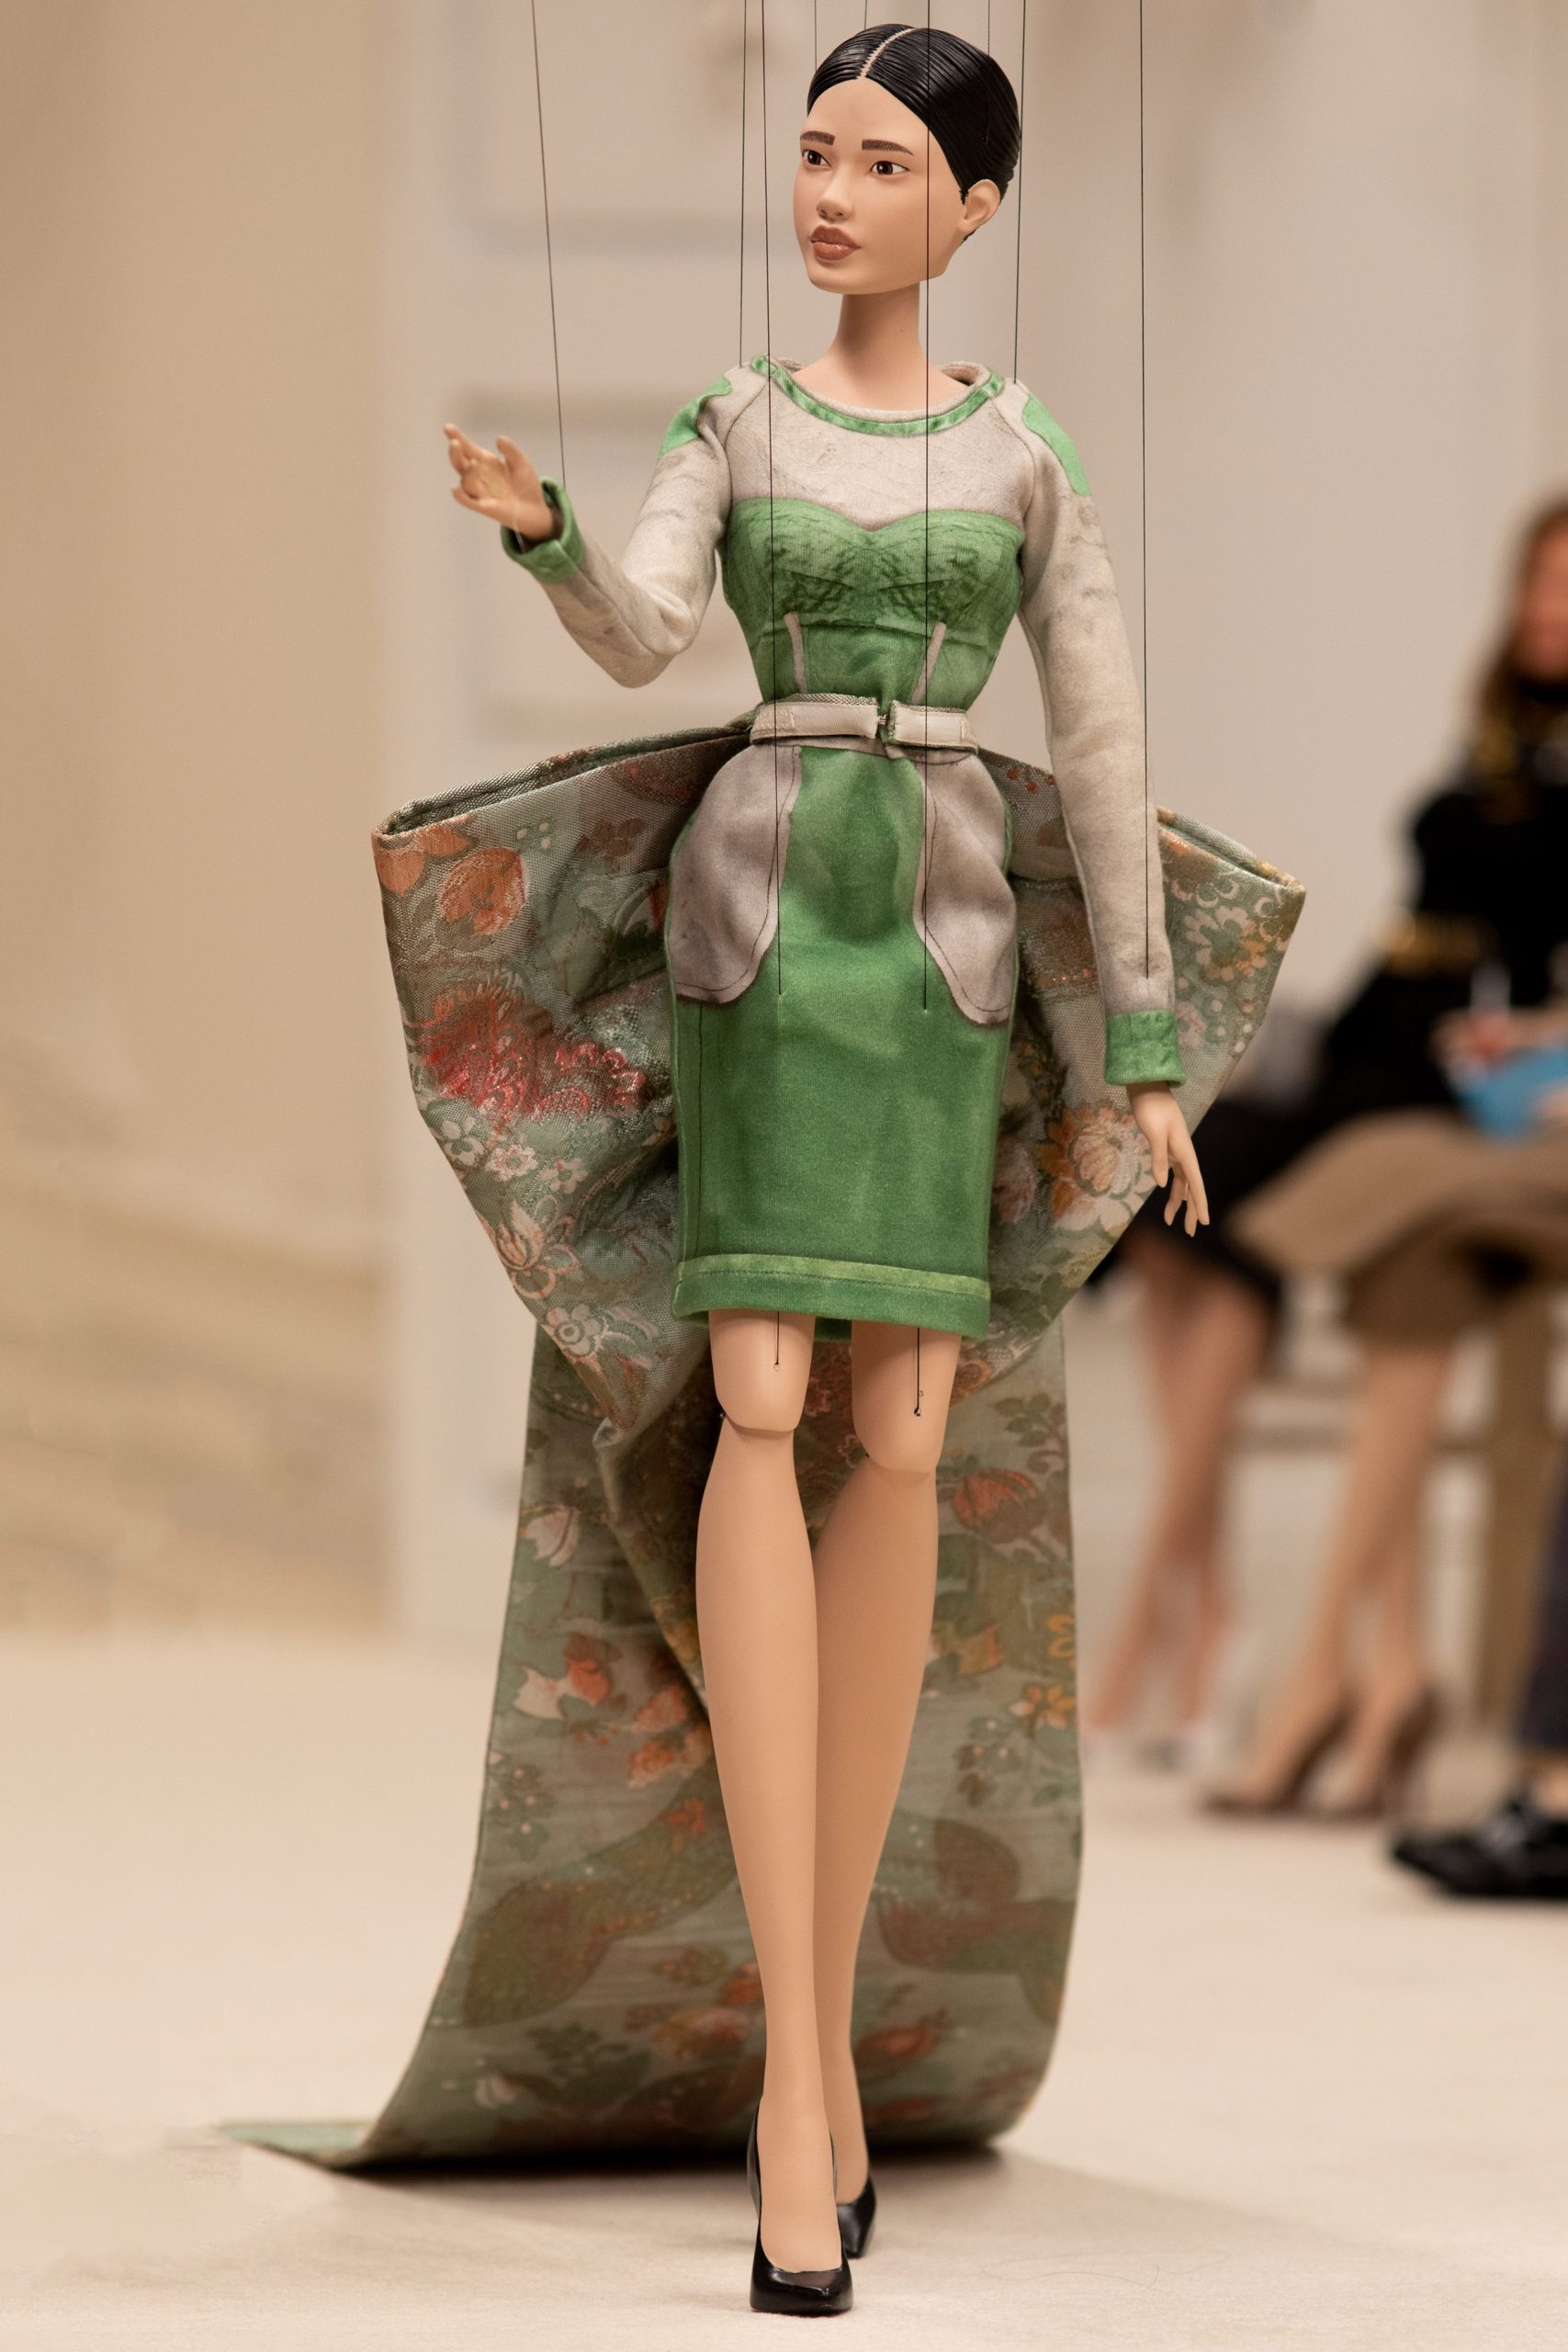 Moschino Barbie and Ken  Dutch Fashion Doll World